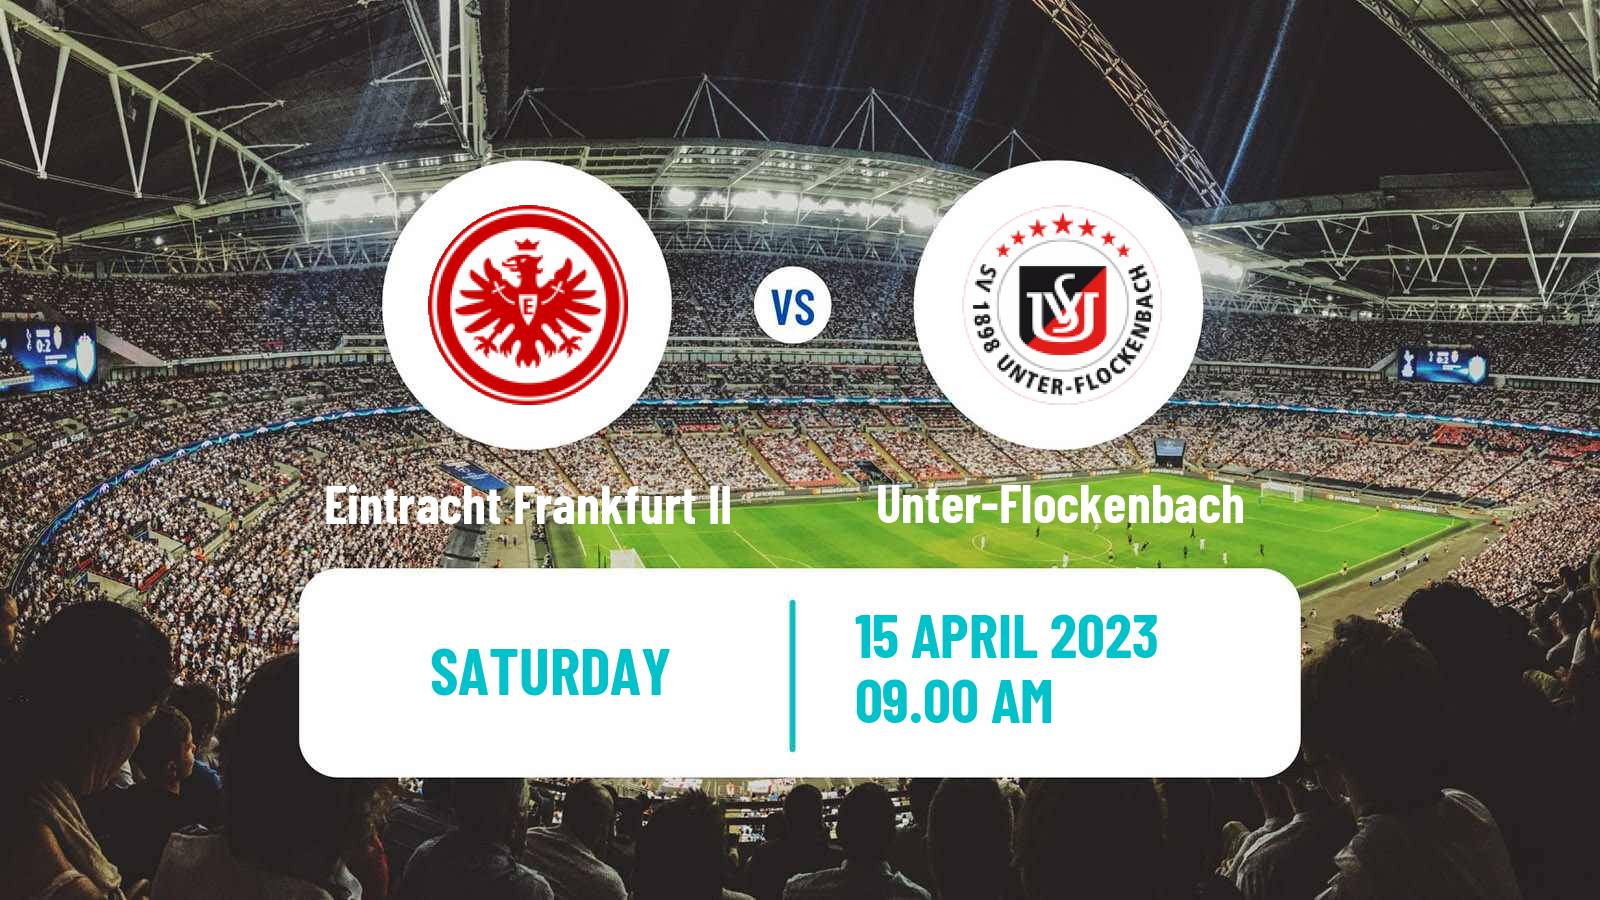 Soccer German Oberliga Hessen Eintracht Frankfurt II - Unter-Flockenbach